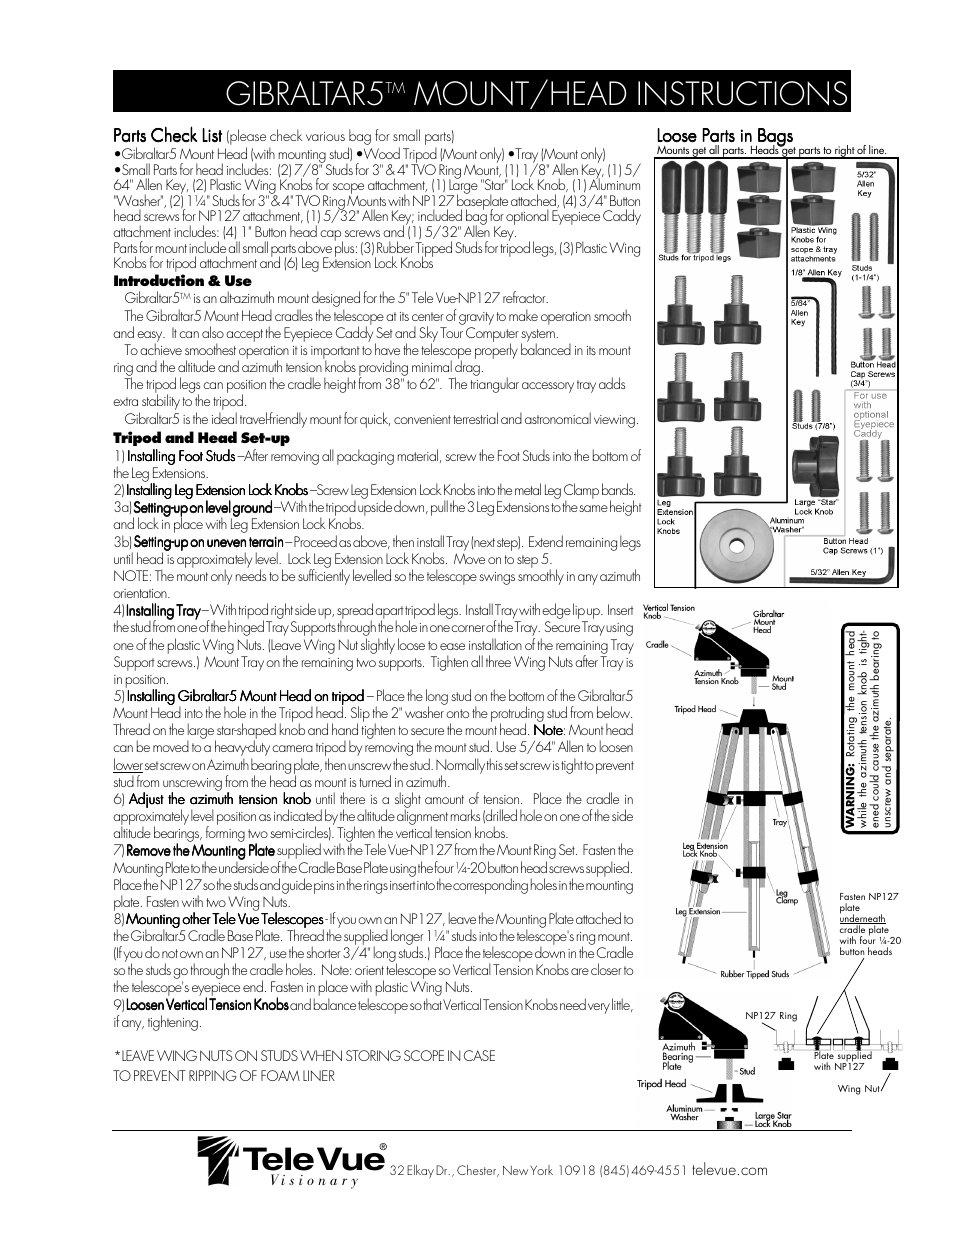 Tele Vue Gibraltar 5 Mount Head User Manual | 1 page